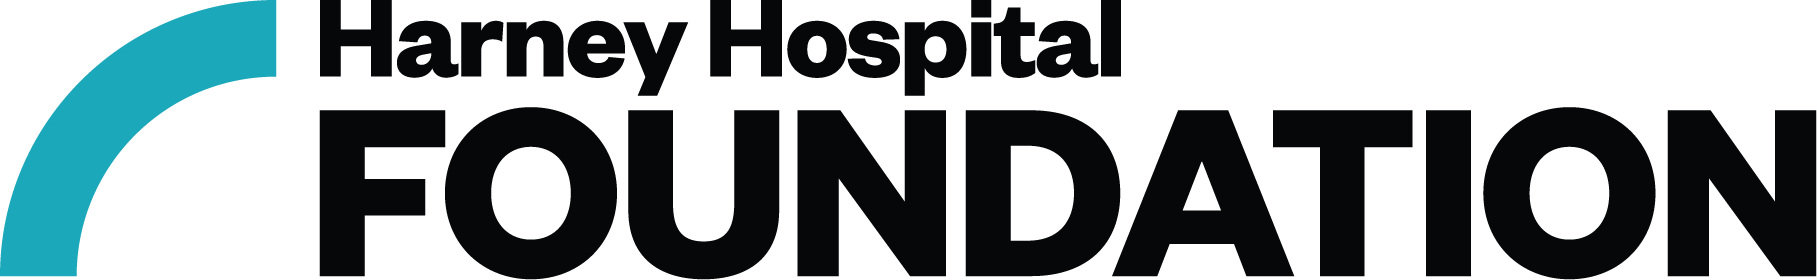 Harney Hospital Foundation logo